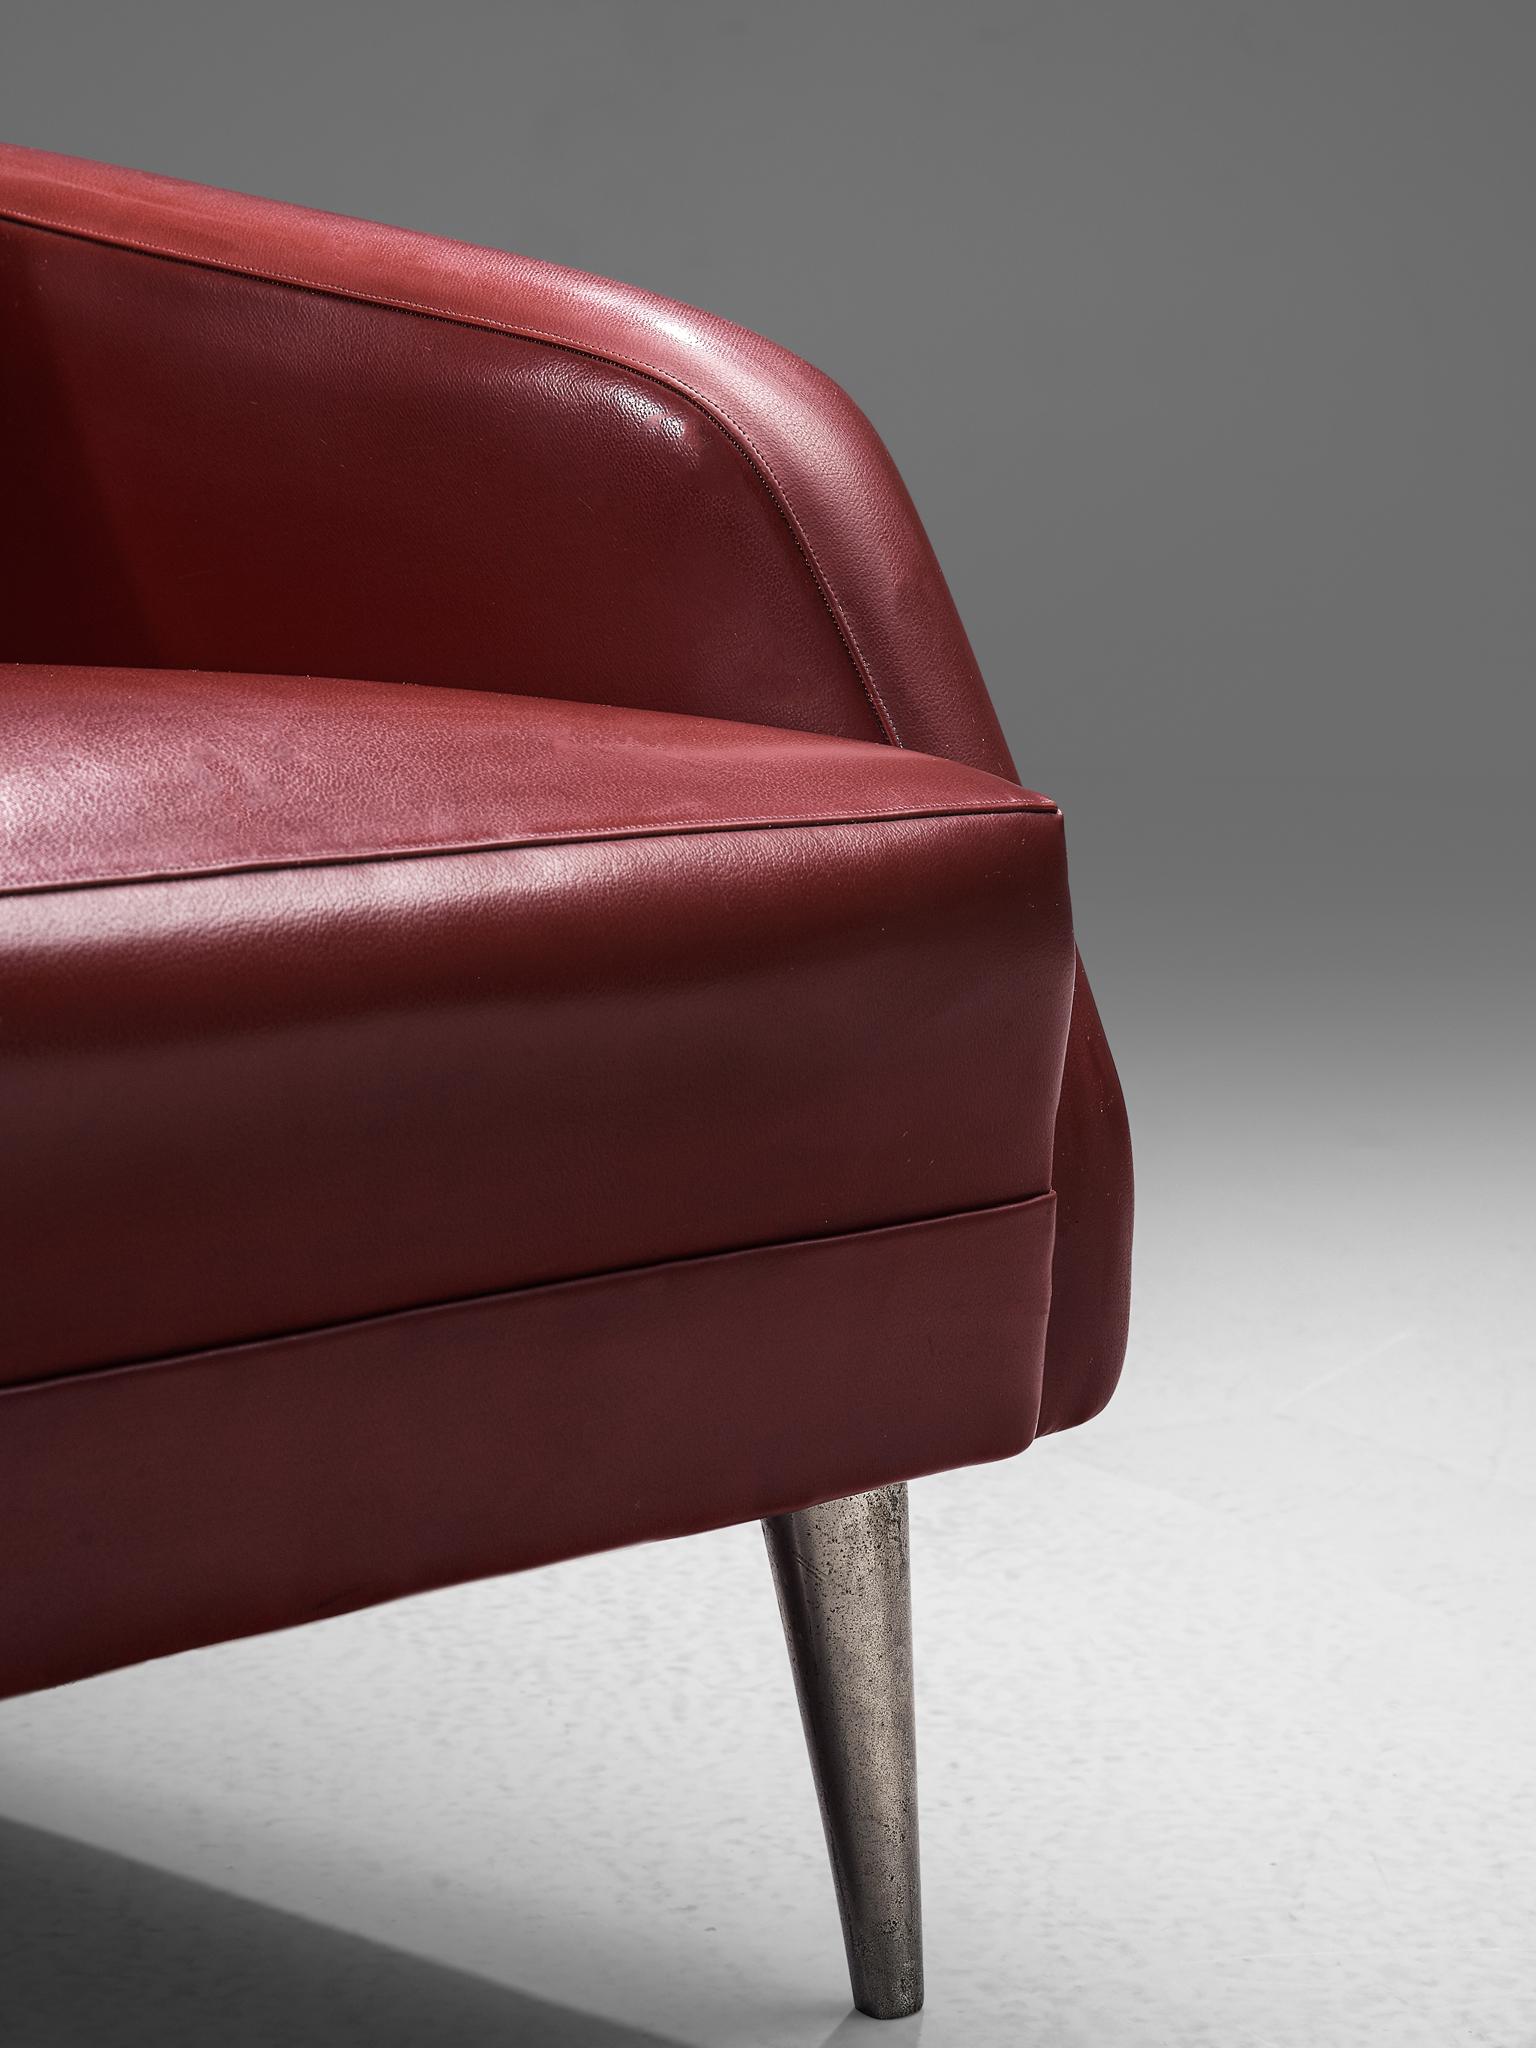 Carlo de Carli Classic Red Lounge Chairs (Messing)